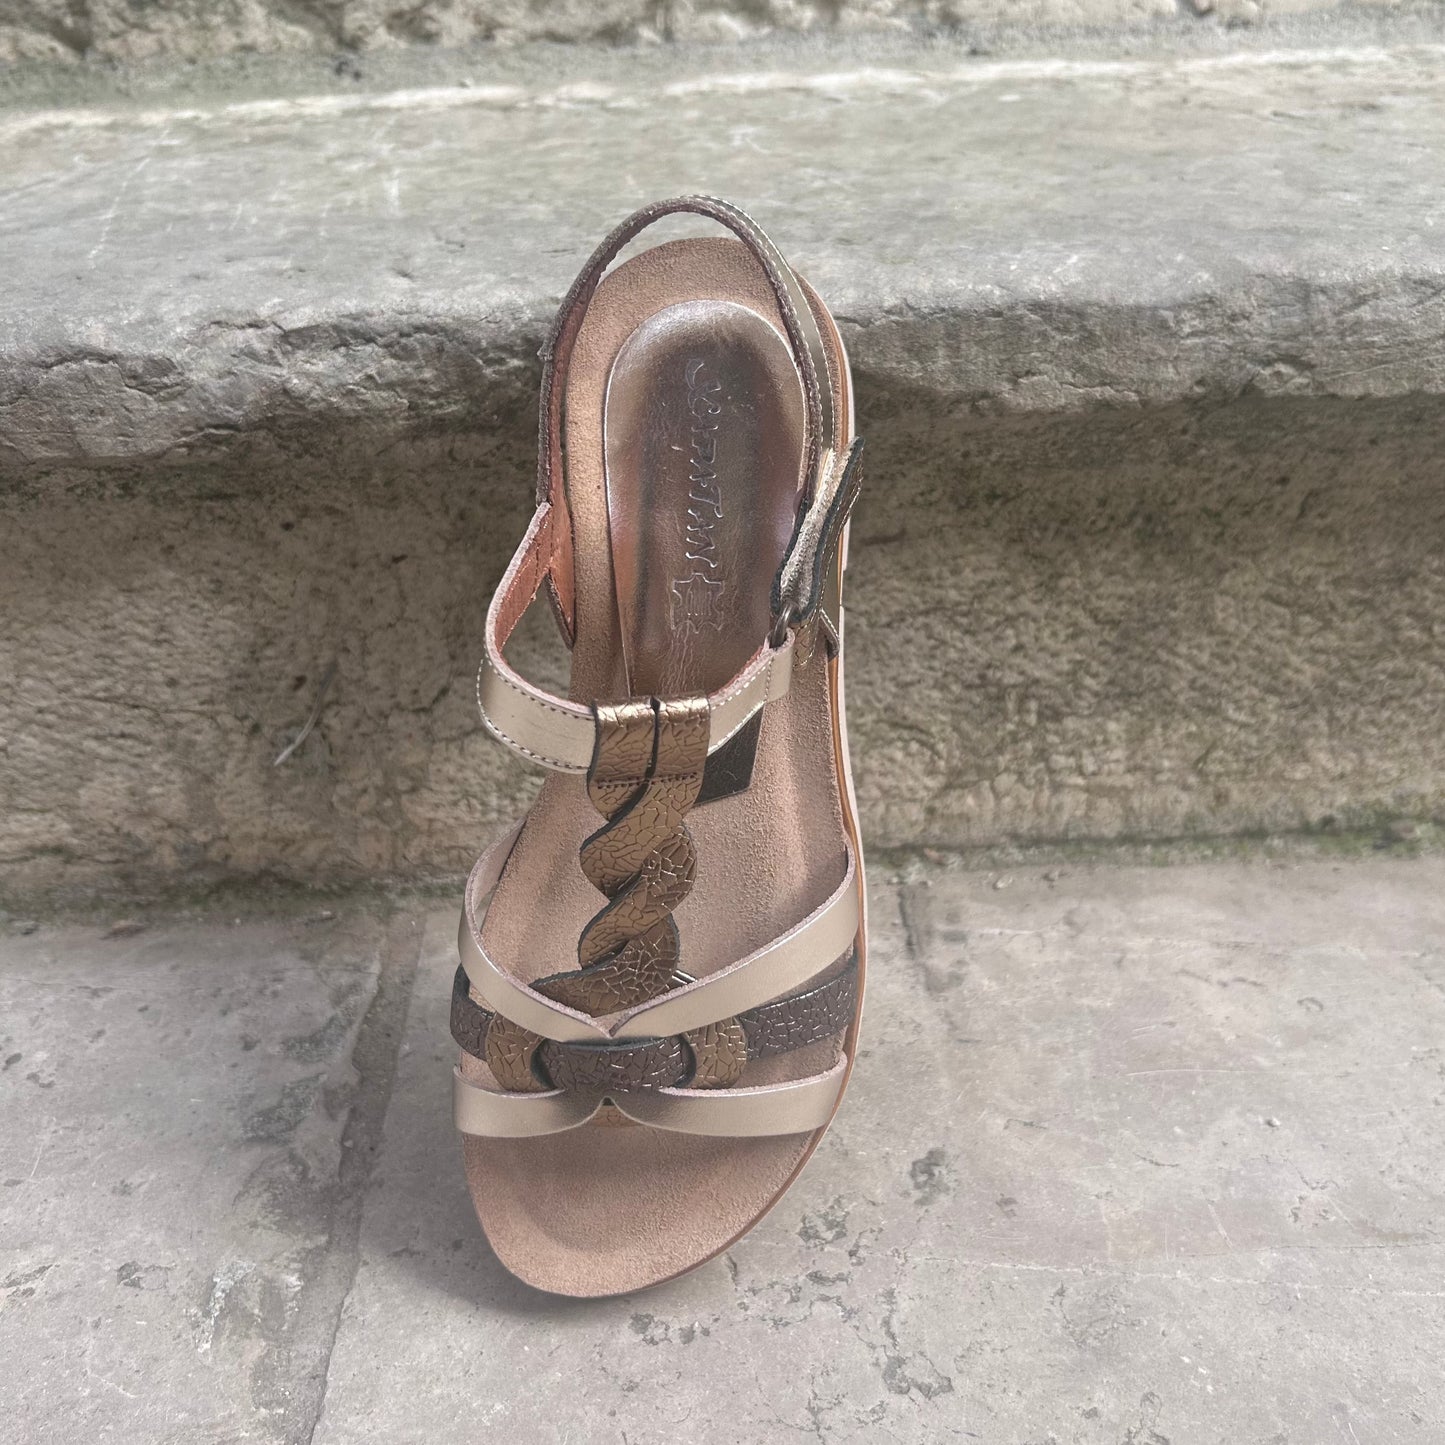 Sandale plate kaki et doré 1532, XAPATAN